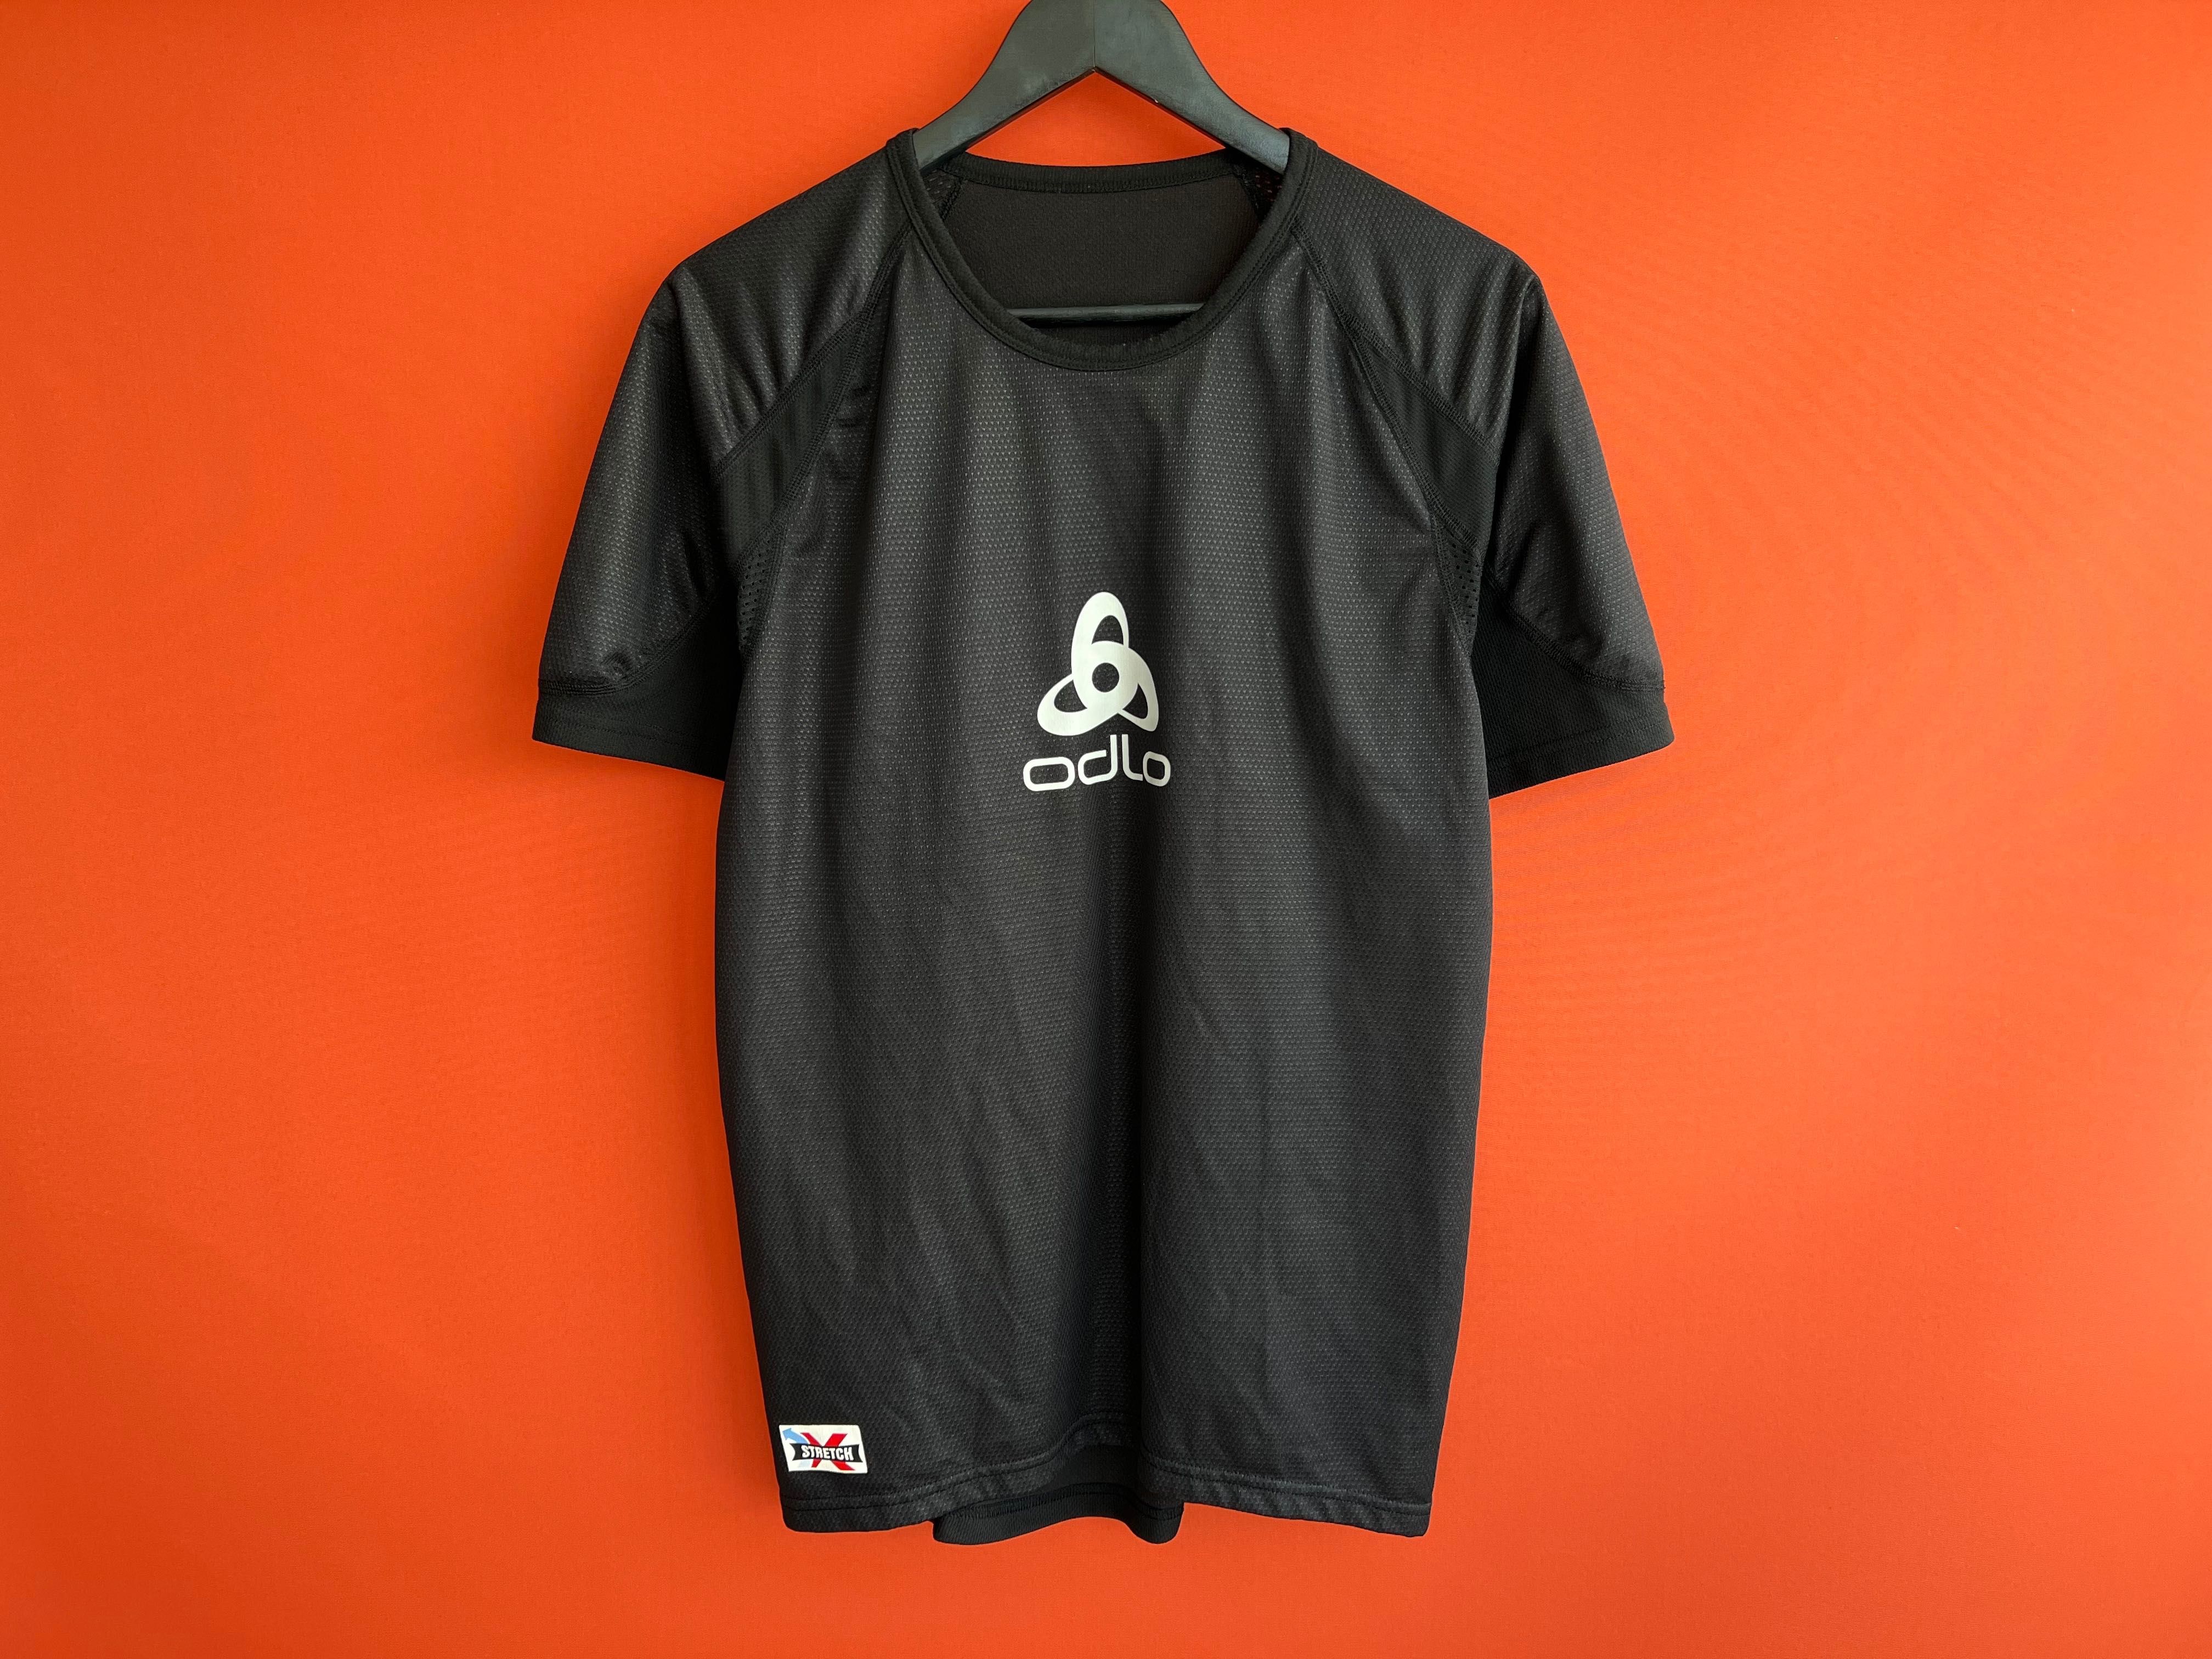 Odlo оригинал мужская спортивная футболка размер L Б У